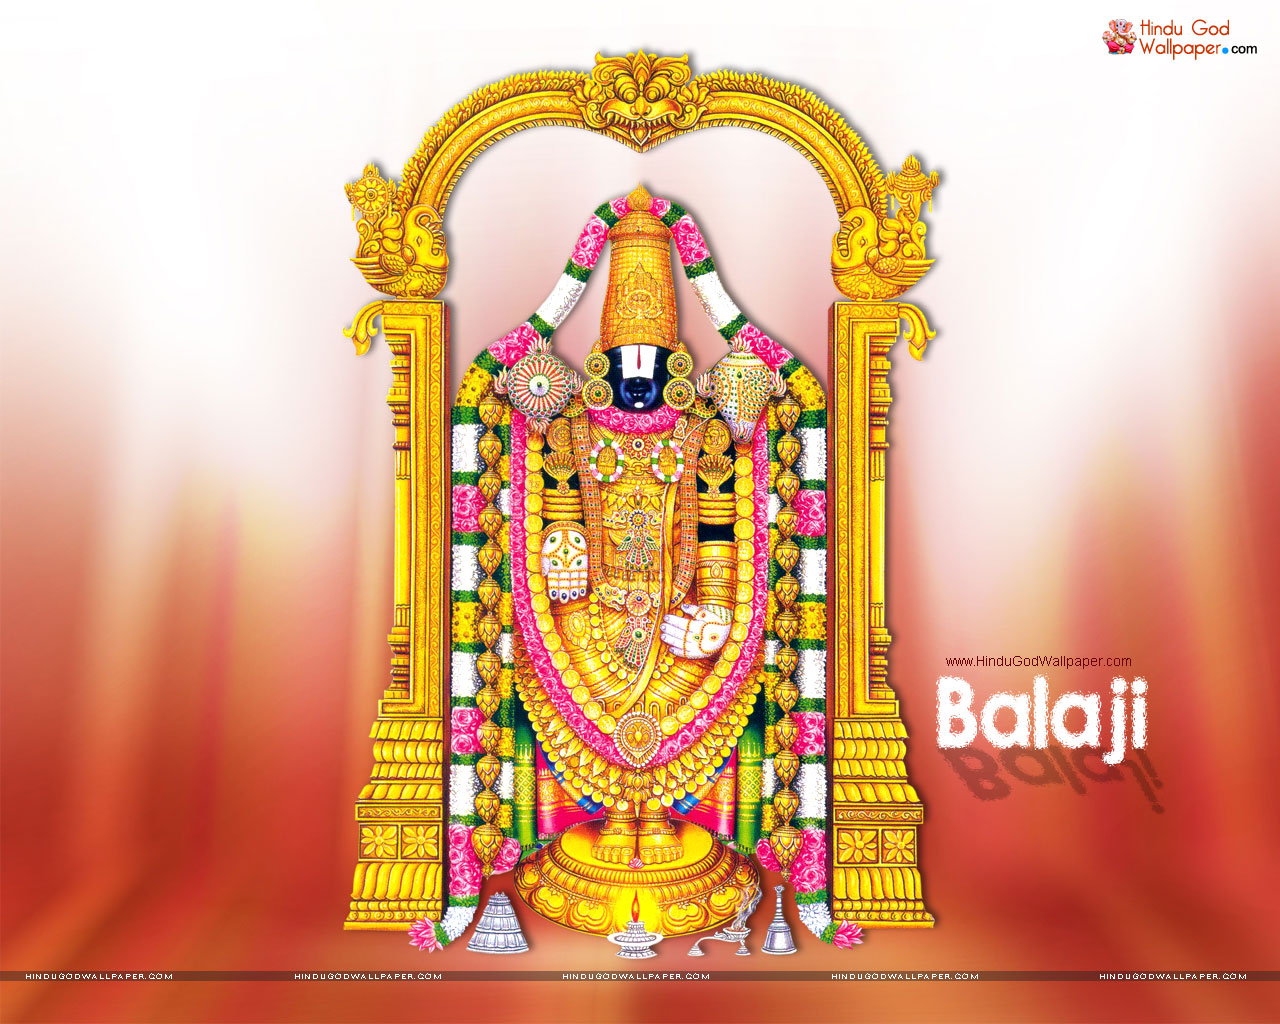 Tirupati Balaji Photos Wallpaper Free Download